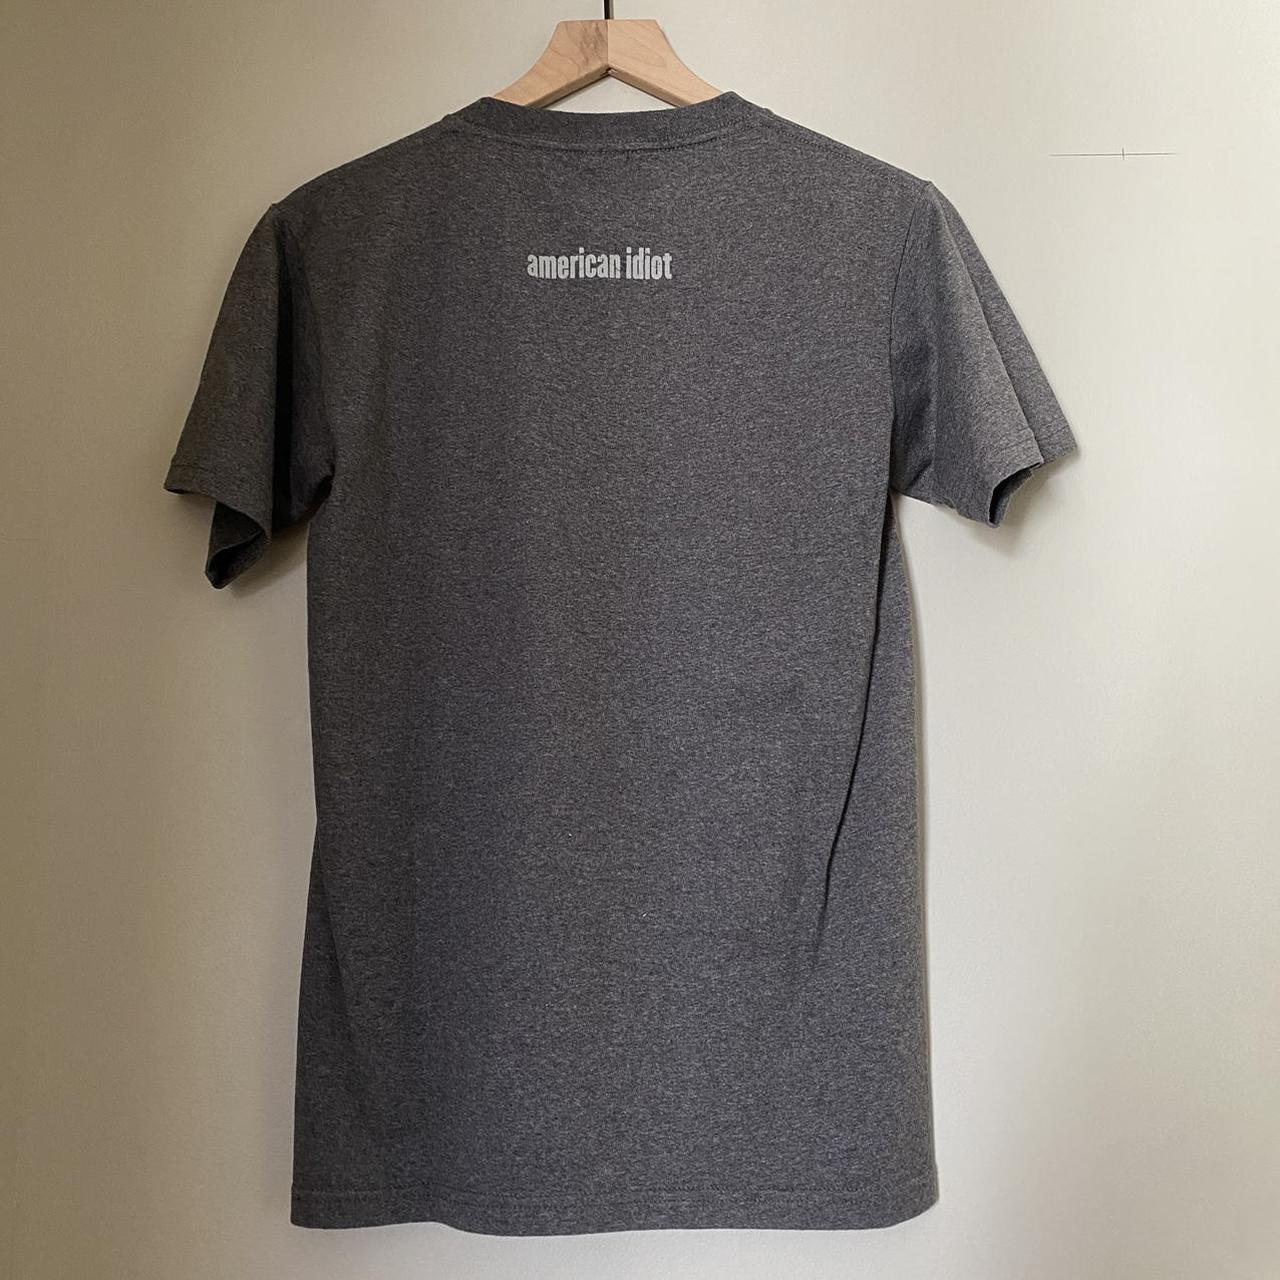 Hot Topic Men's Grey and Black T-shirt (2)